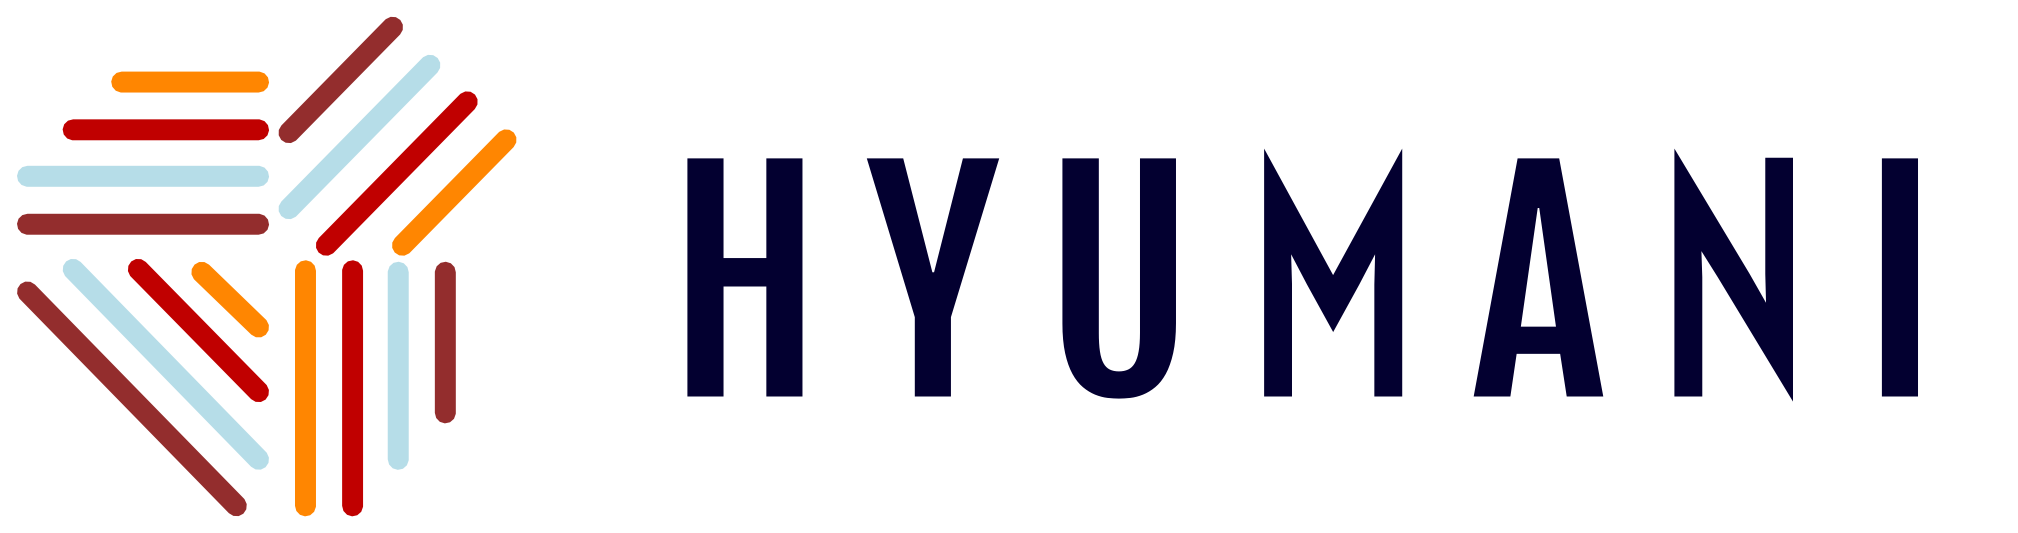 hyumani.com - solution for extrinsic motivation inspiring self development and self improvement